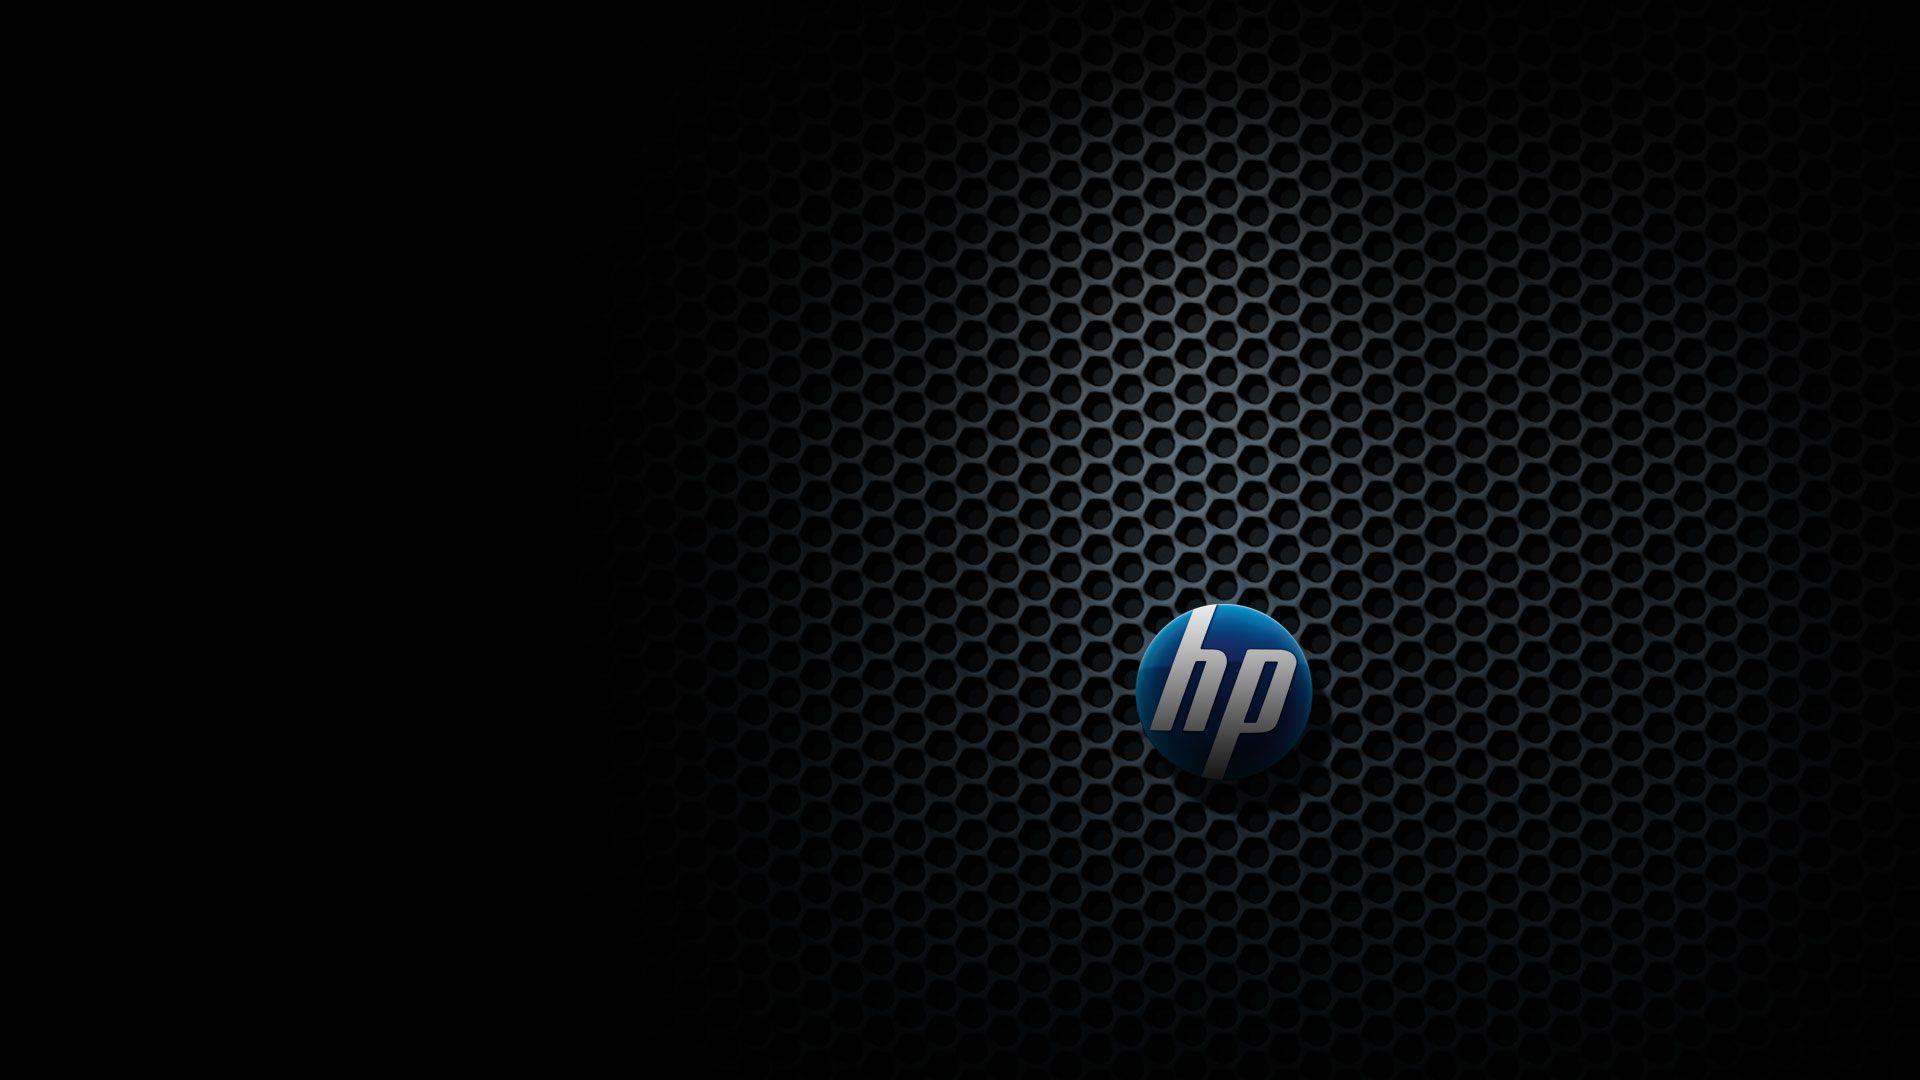 Hp Desktop Wallpapers Top Free Hp Desktop Backgrounds Wallpaperaccess